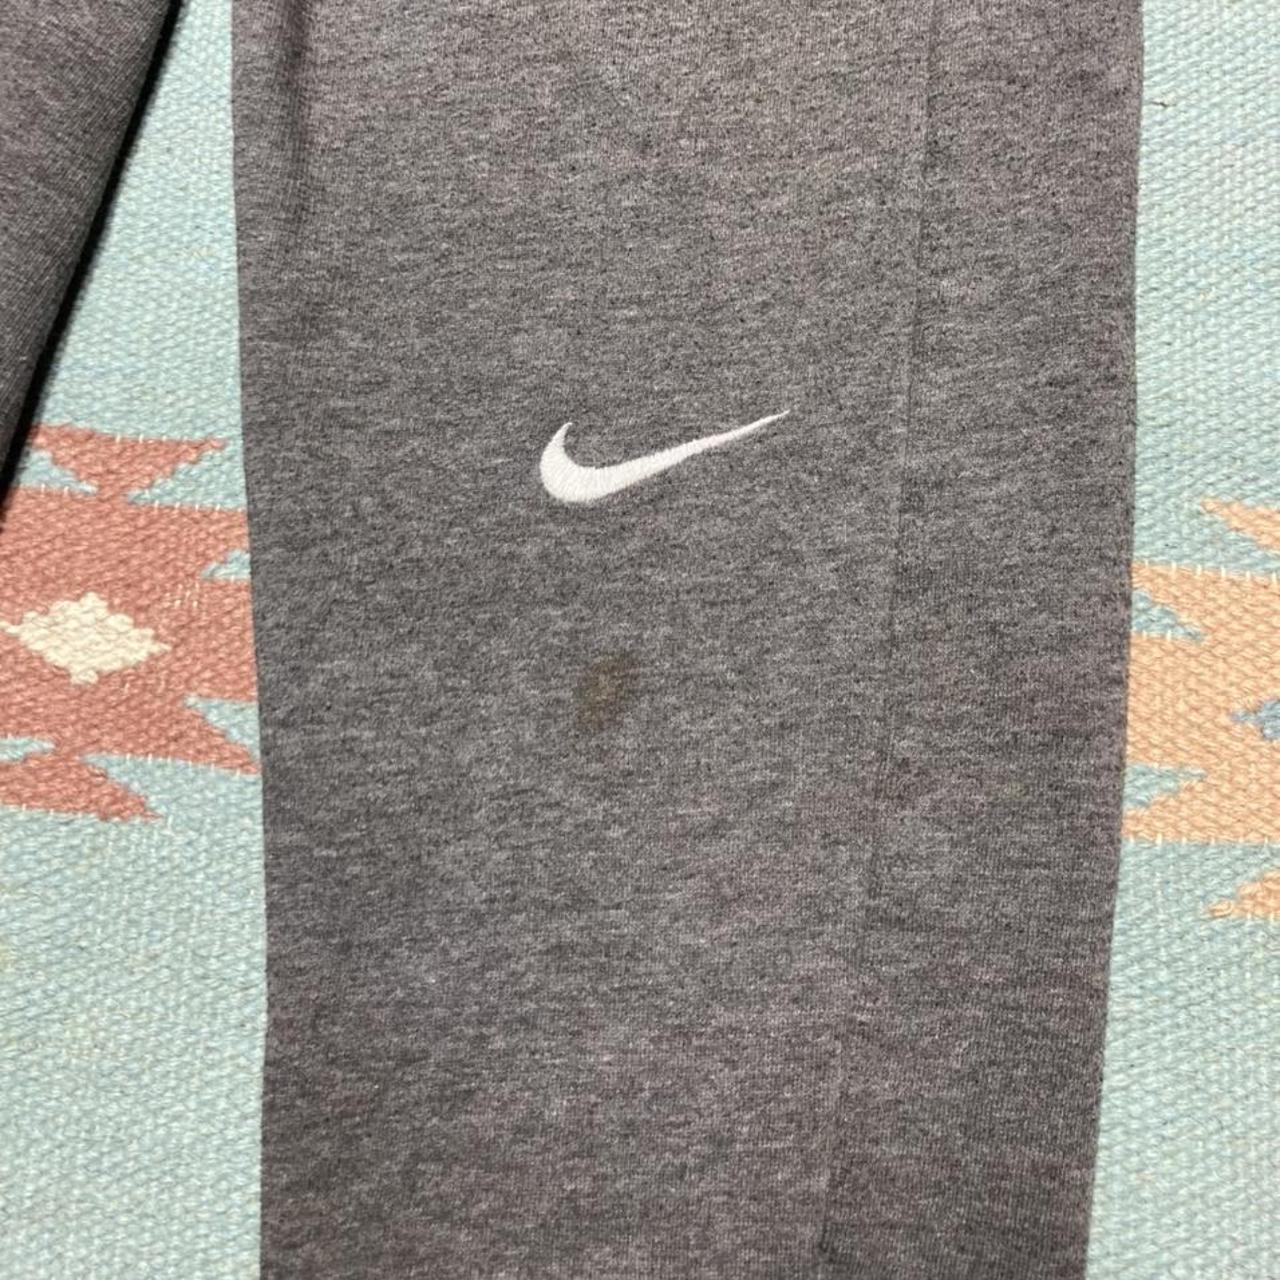 Vintage Nike sweatpants white tag 90s y2k faded gray - Depop